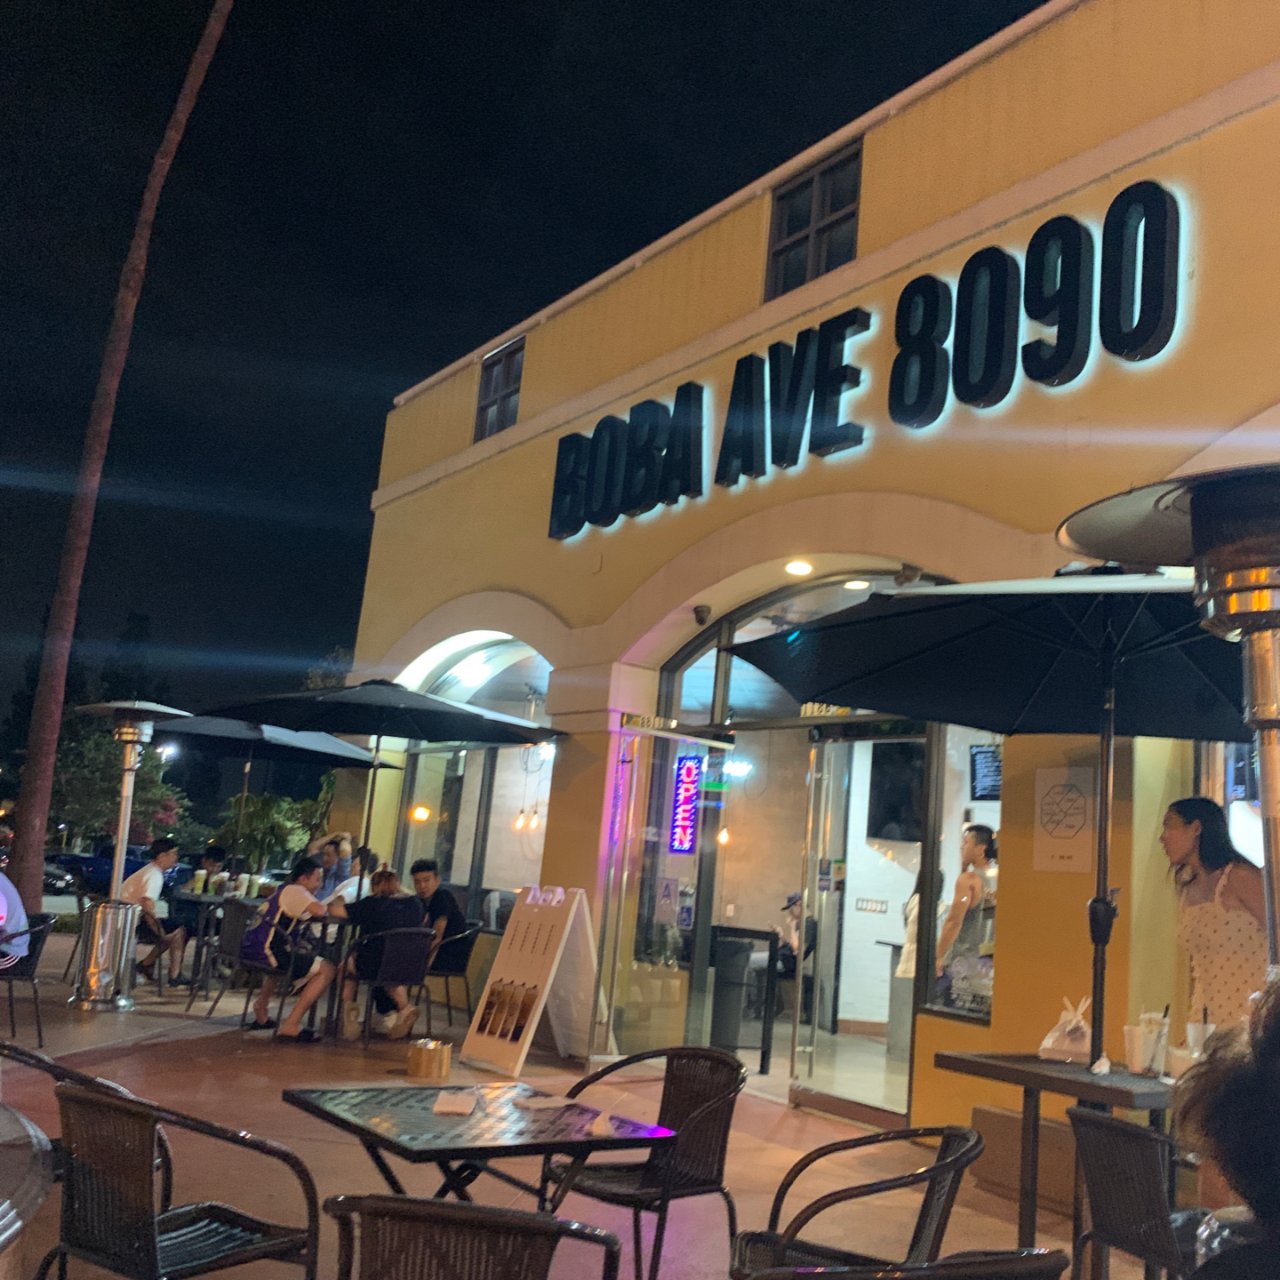 Boba Ave 8090